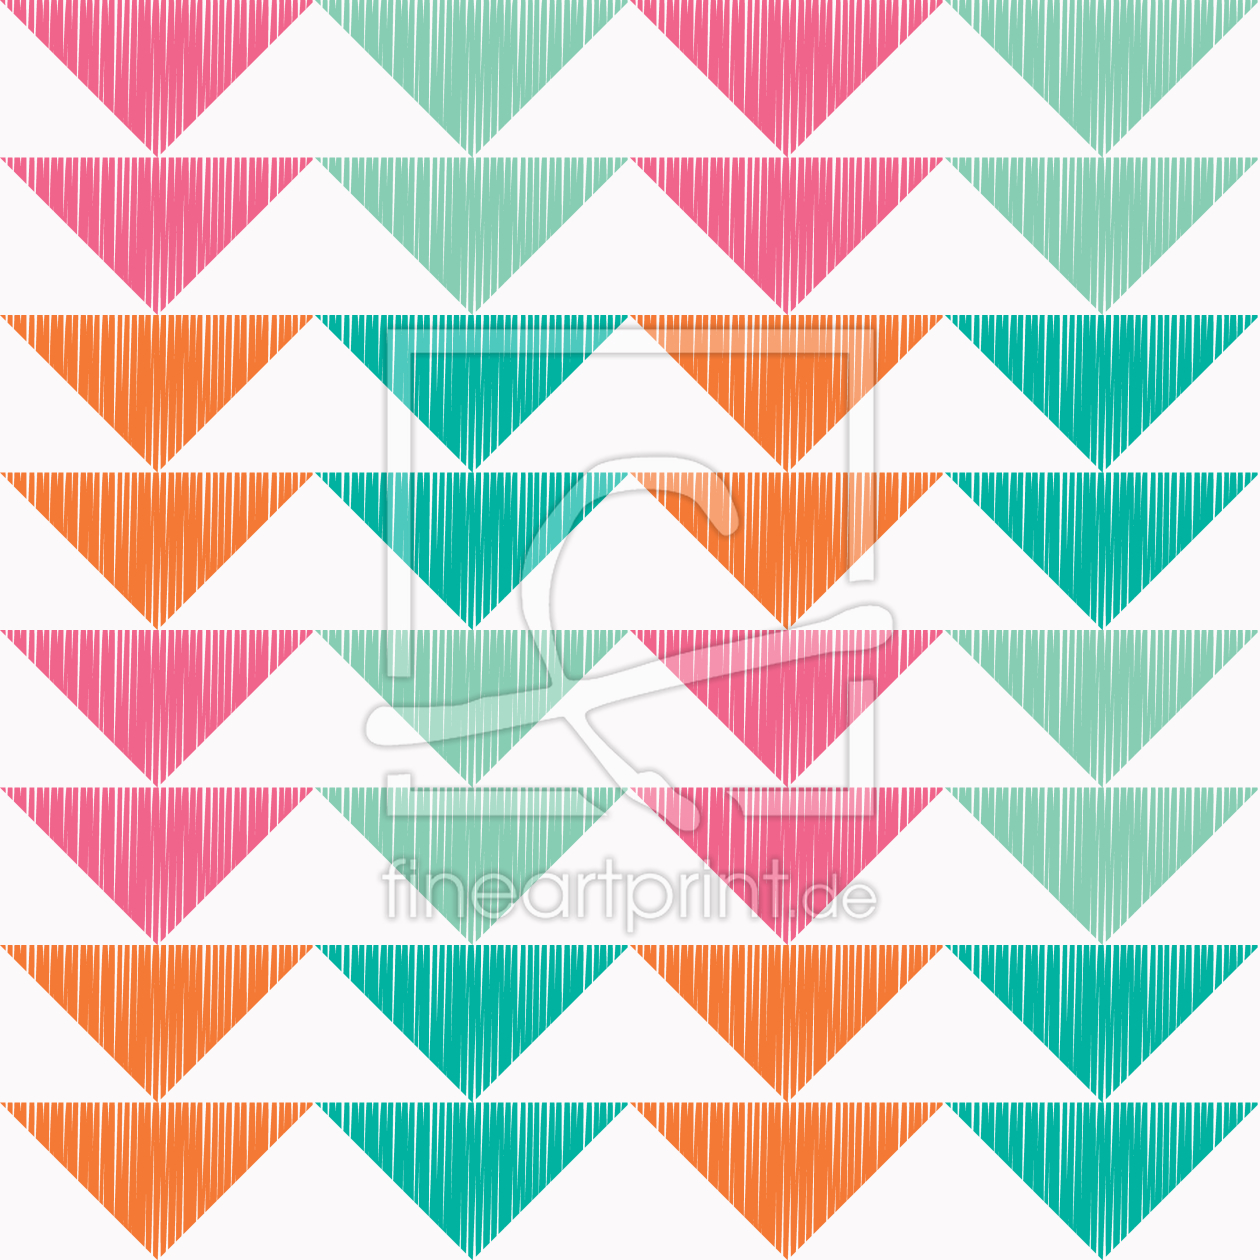 Bild-Nr.: 9014415 Dreiecks-Abfolge erstellt von patterndesigns-com